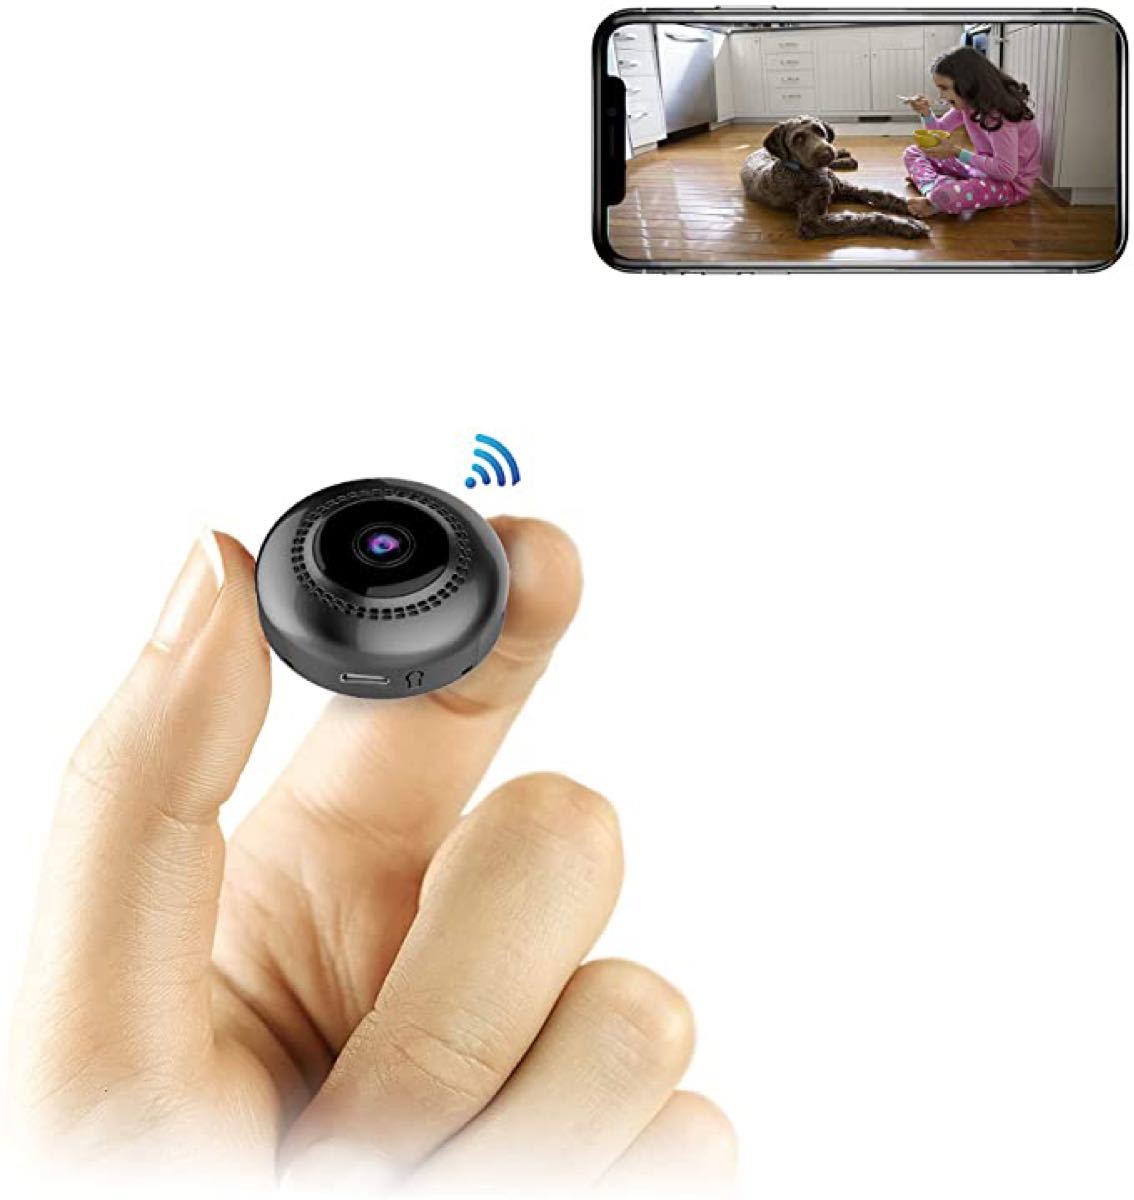 防犯カメラ 超小型カメラ WiFi4K HD 録画 録音 遠隔監視 動体検知 暗視機能 赤外線撮影 150°広角 室内 屋外